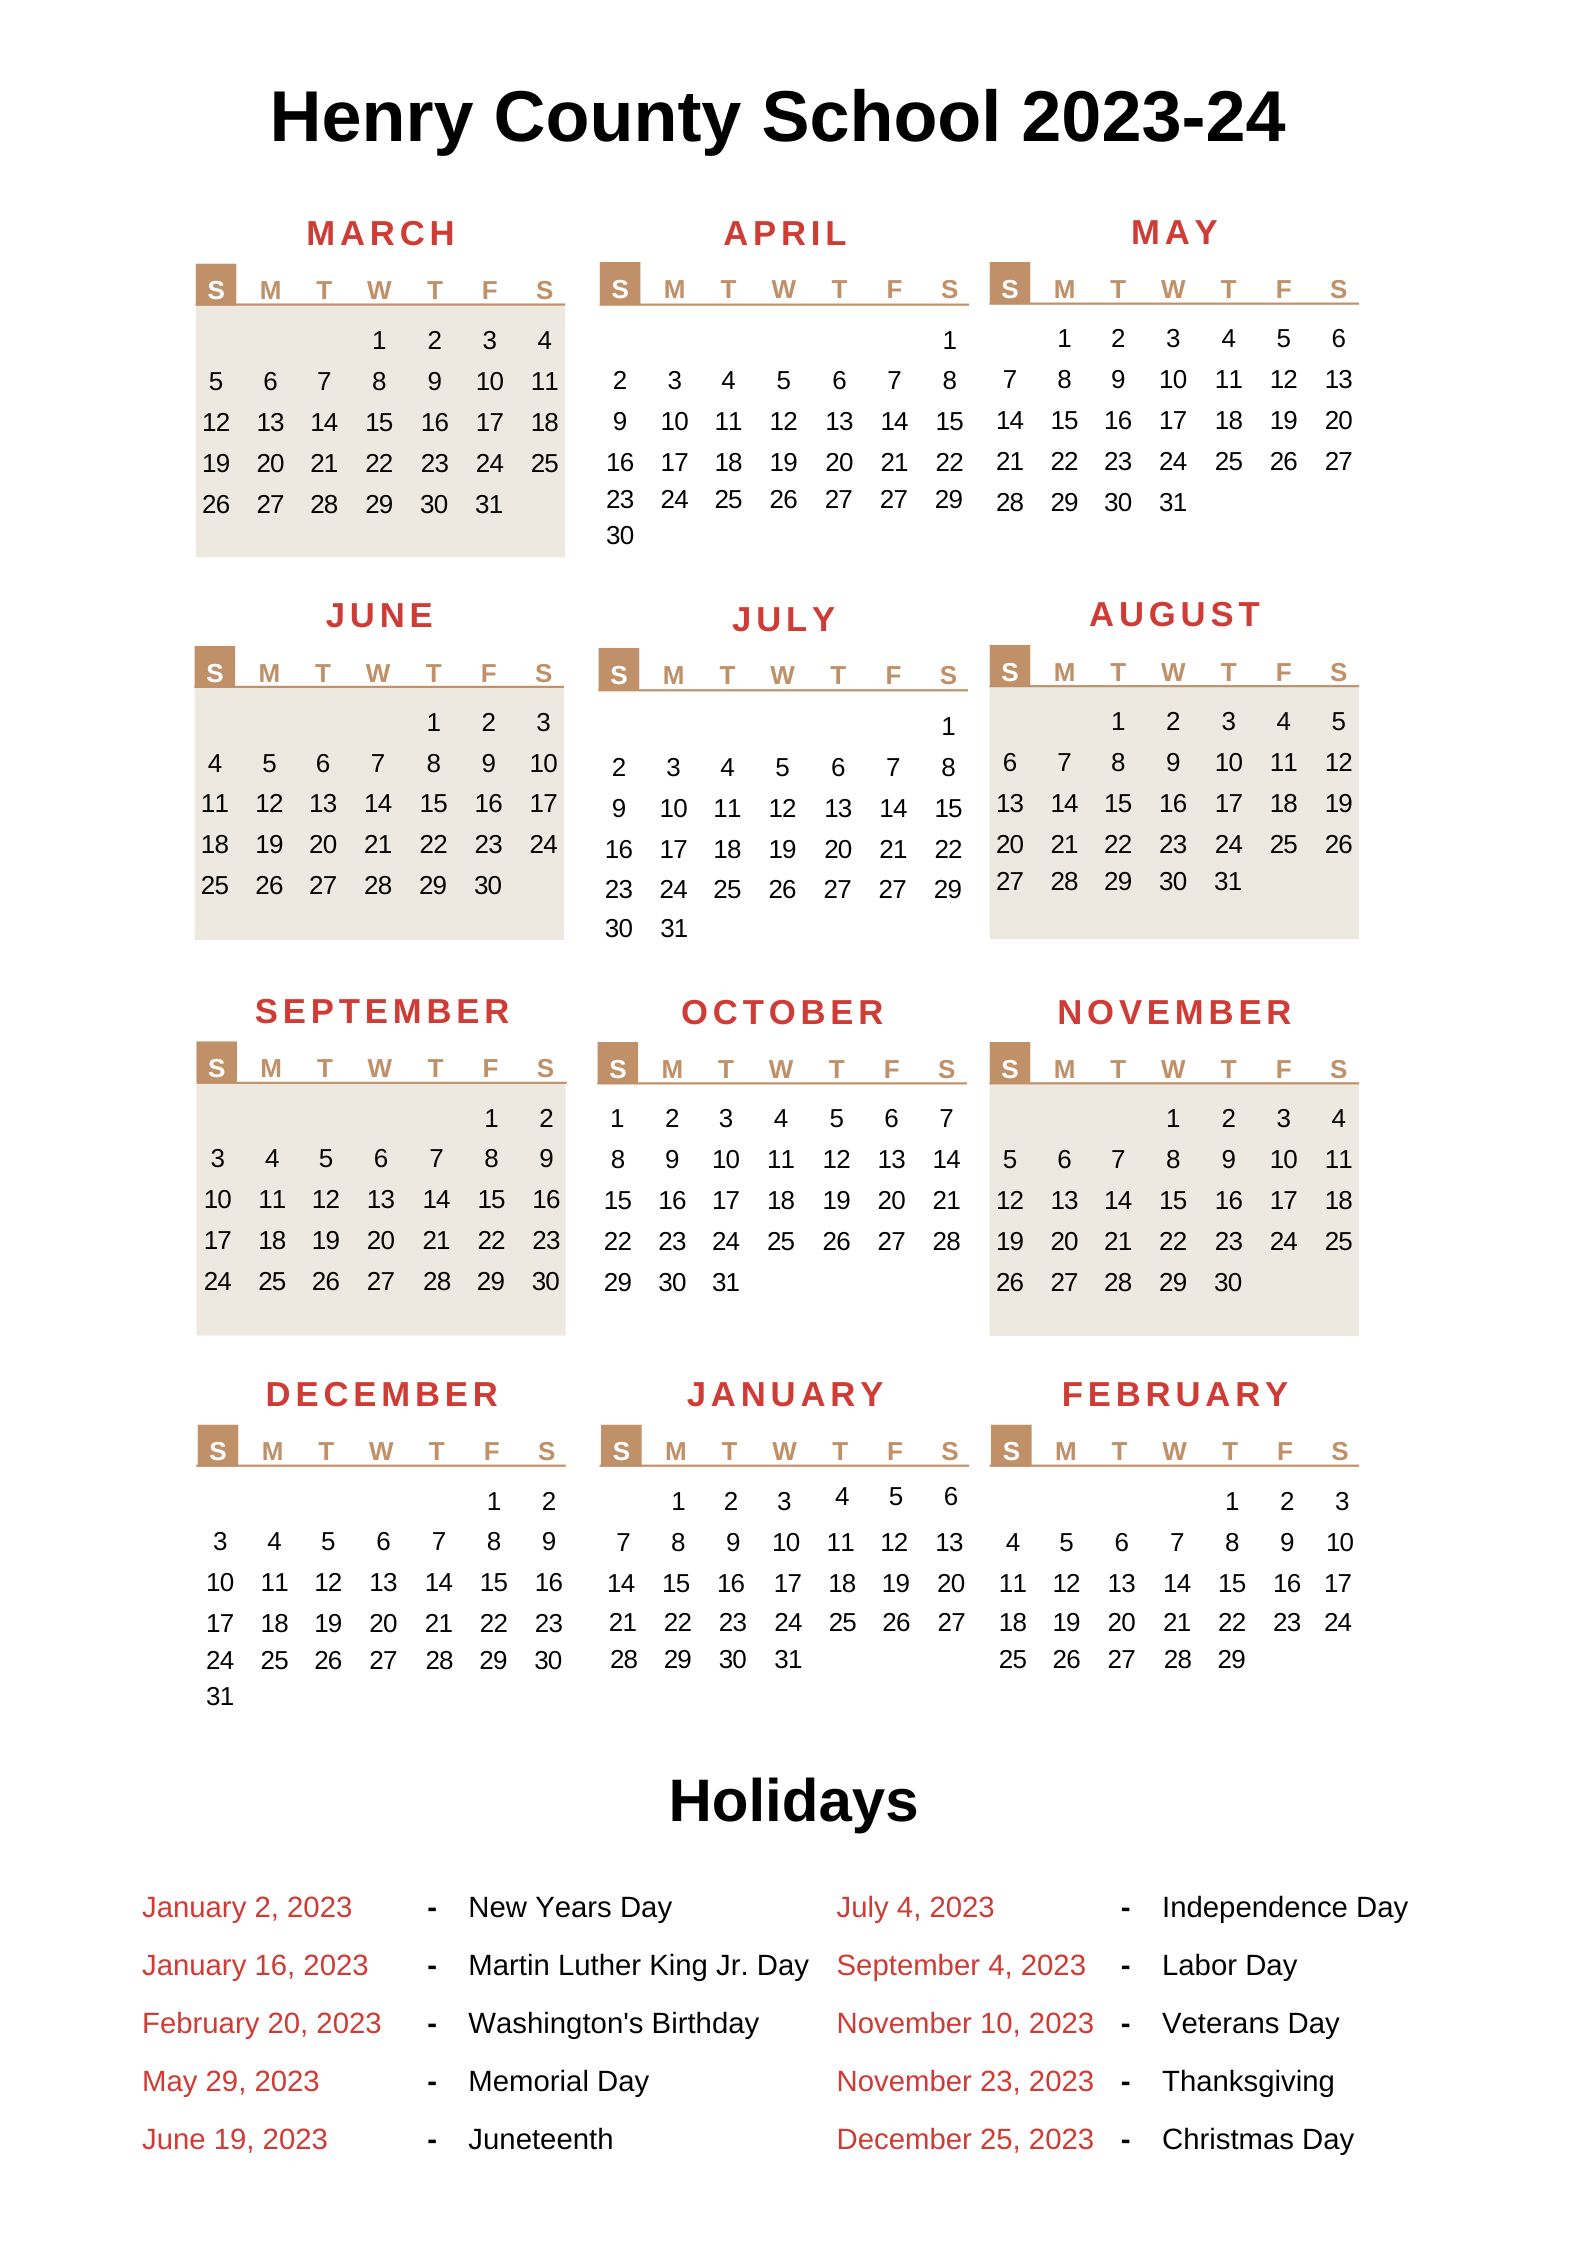 Henry County Schools Calendar Archives County School Calendar 202324